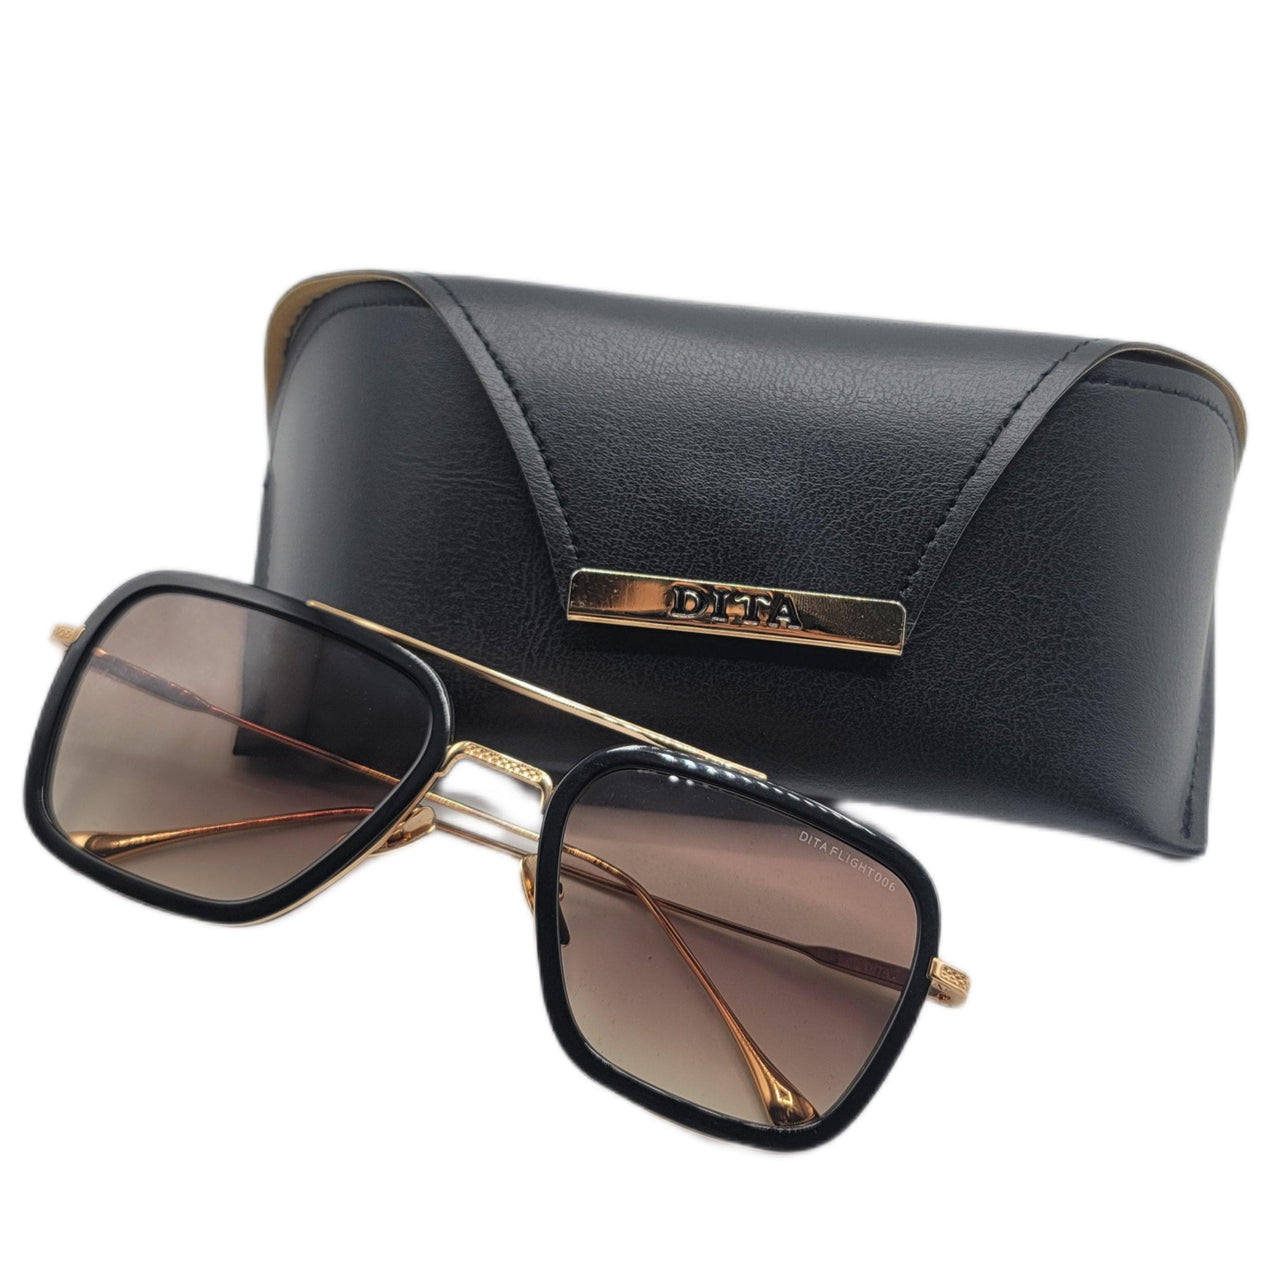 The Bag Couture Sunglasses DITA Flight Sunglasses BLBR